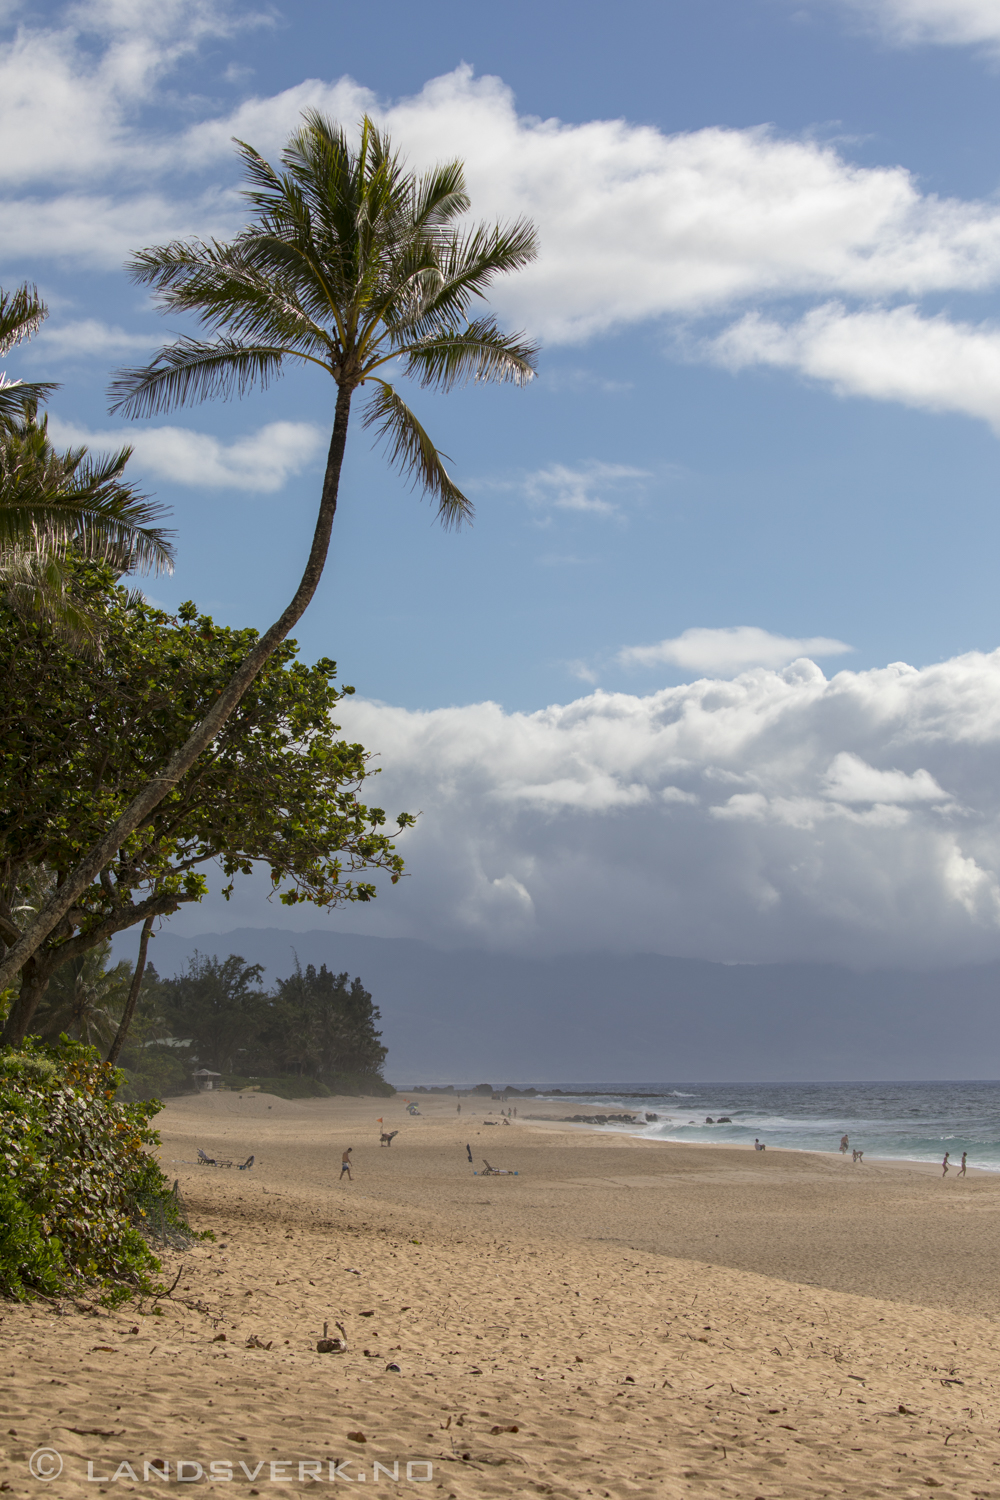 Ehukai Beach. O‘ahu, Hawaii. 

(Canon EOS 5D Mark IV / Canon EF 100-400mm f/4.5-5.6 L IS II USM)